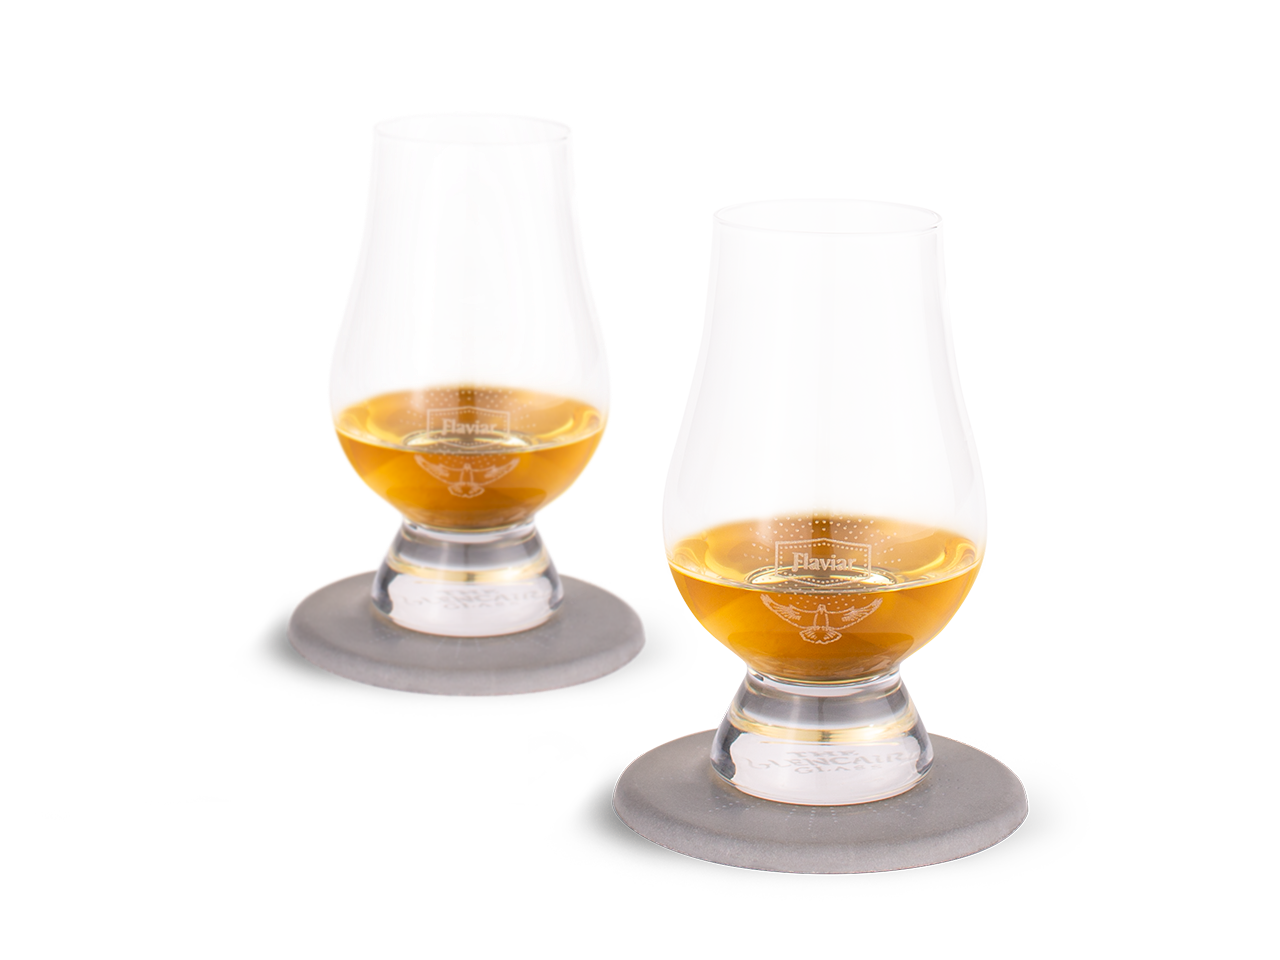 2 Flaviar Whisky Glasses & Coasters